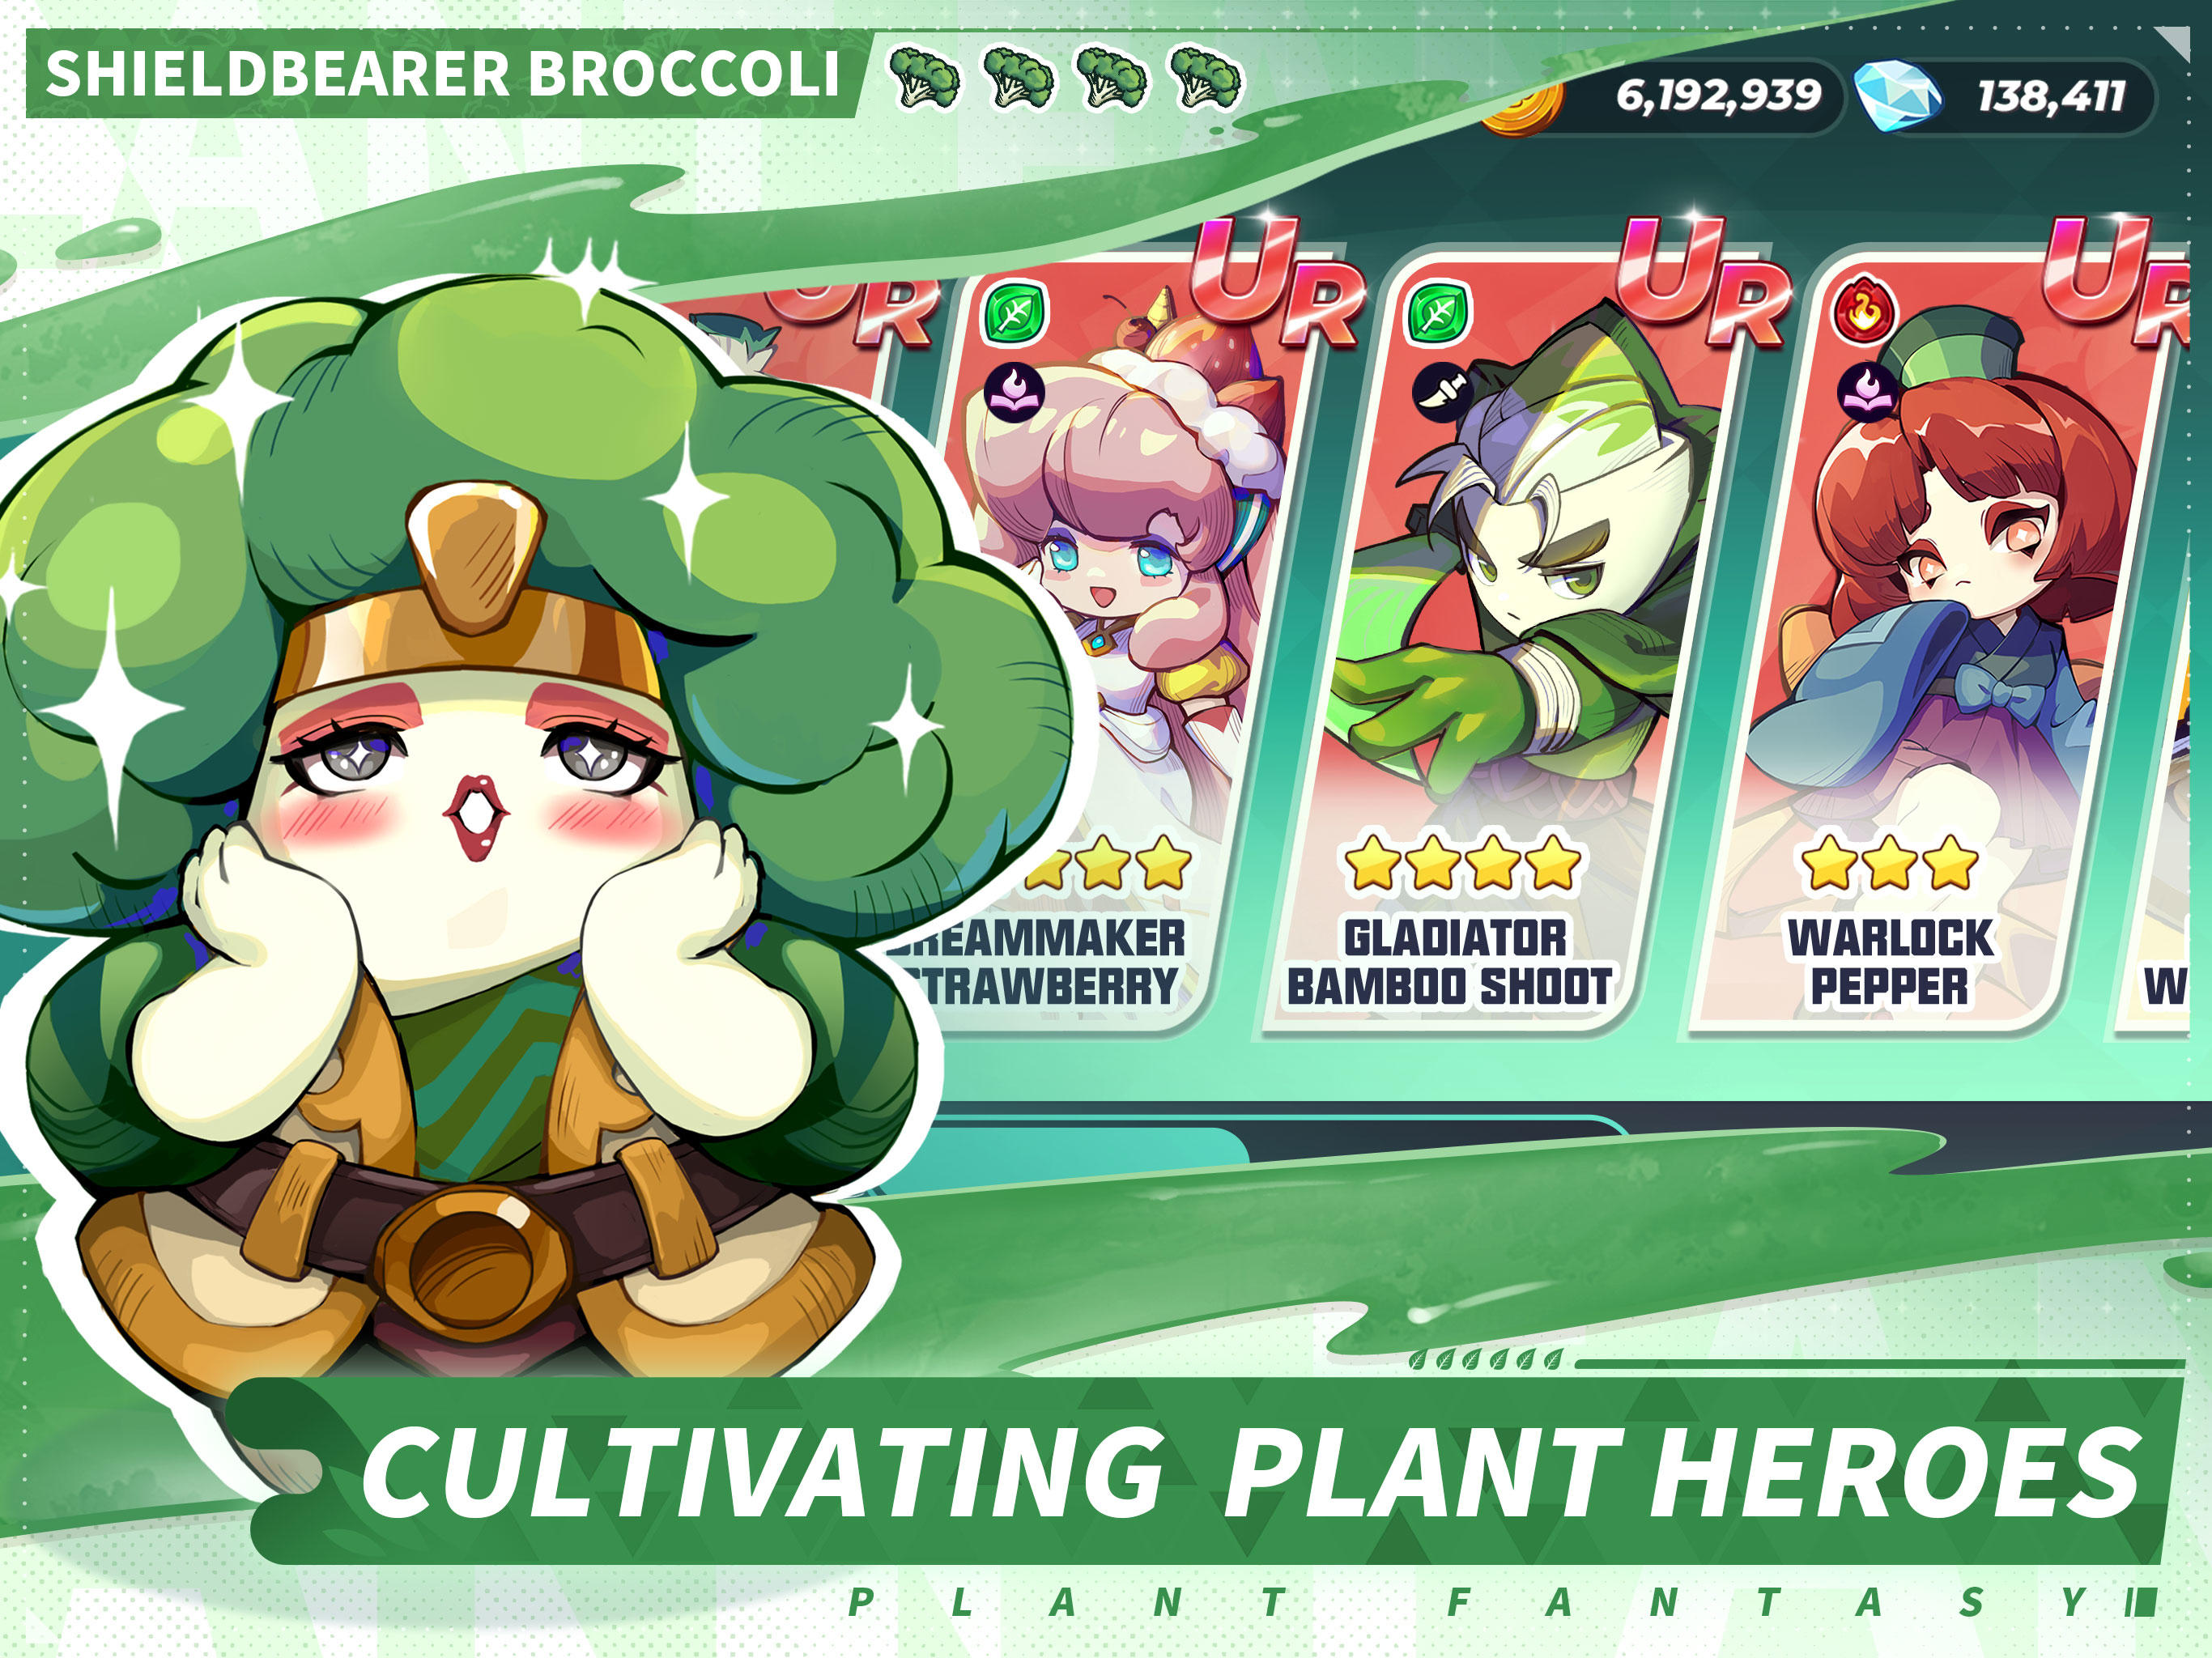 Screenshot of Plant Fantasy